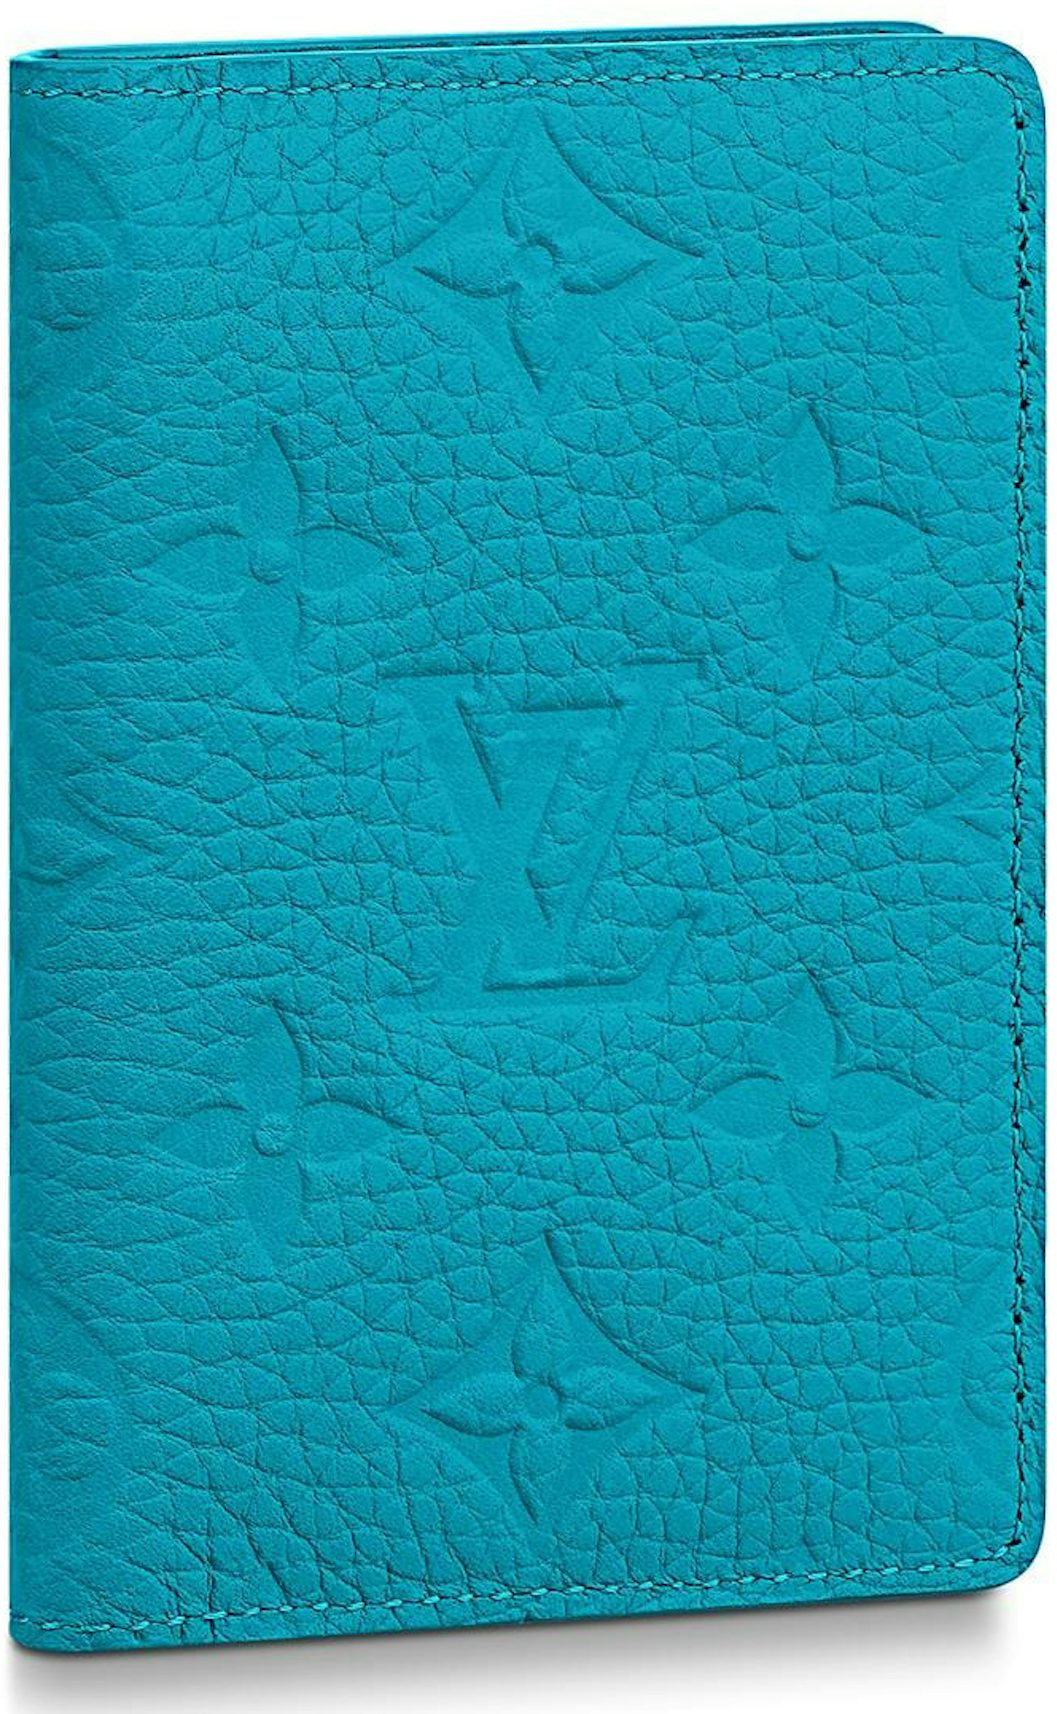 Louis Vuitton Pocket Organizer Taurillon Illusion Blue/Green in